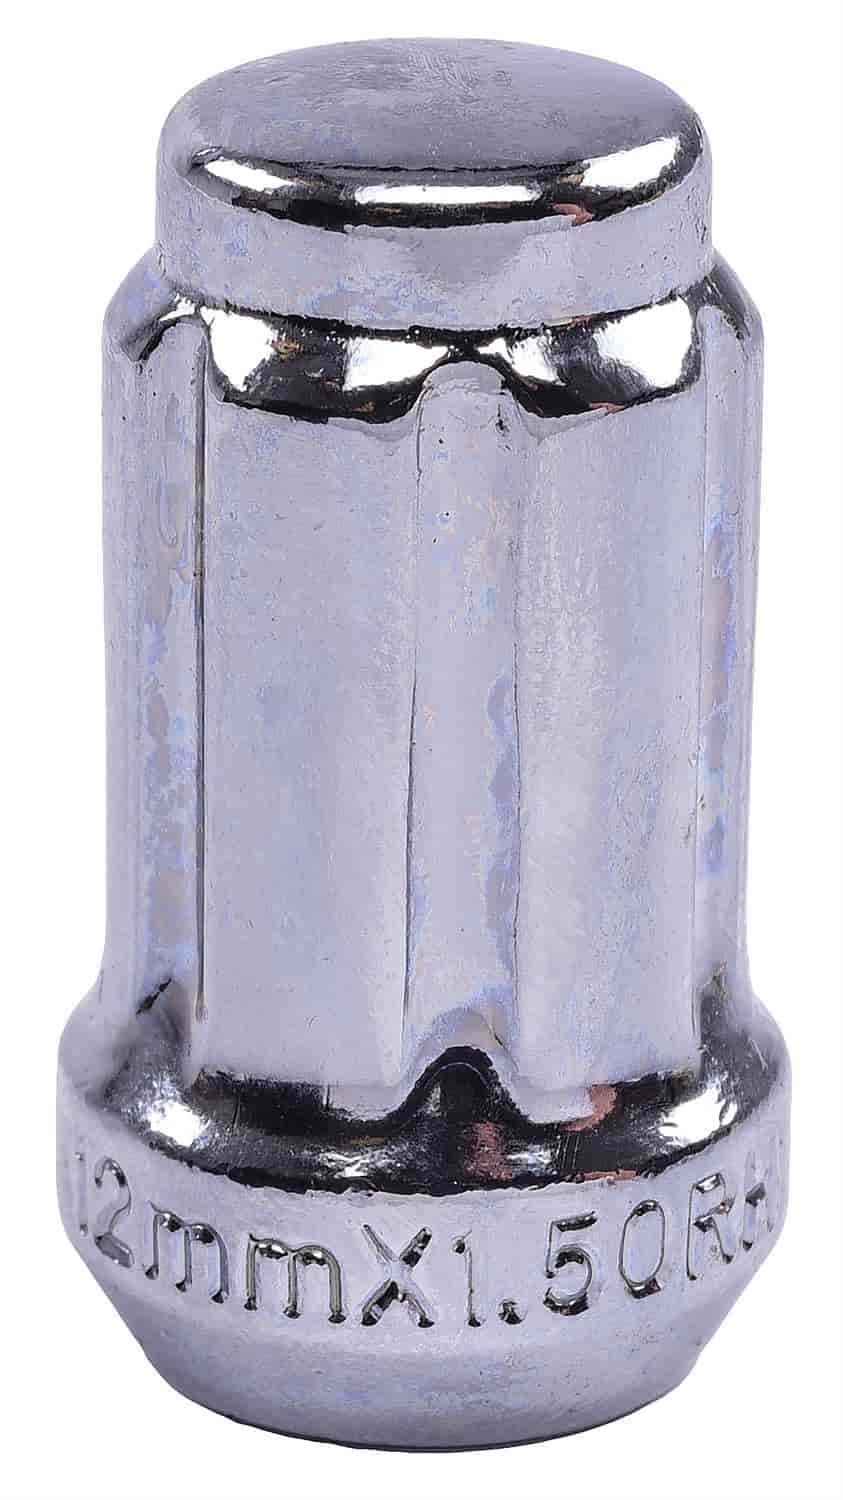 Spline Drive Lug Nuts, Short Closed-End [12mm x 1.5 RH, Chrome]